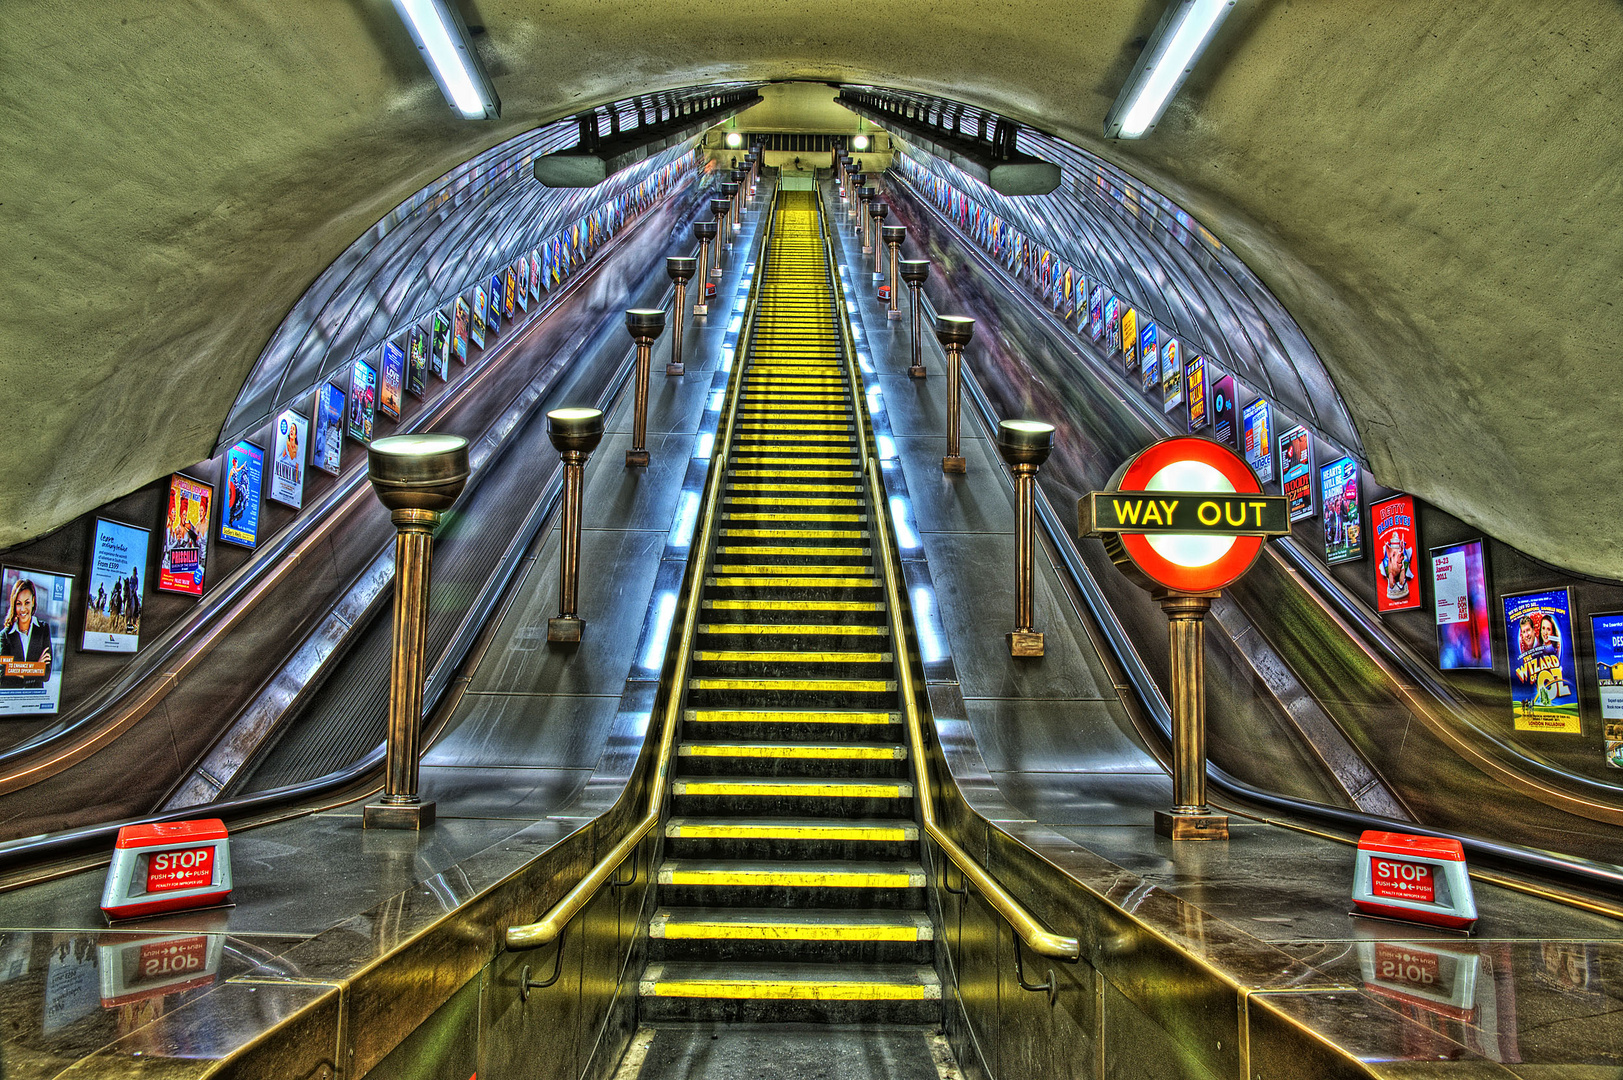 Way out, London Tube, St.-John's Wood